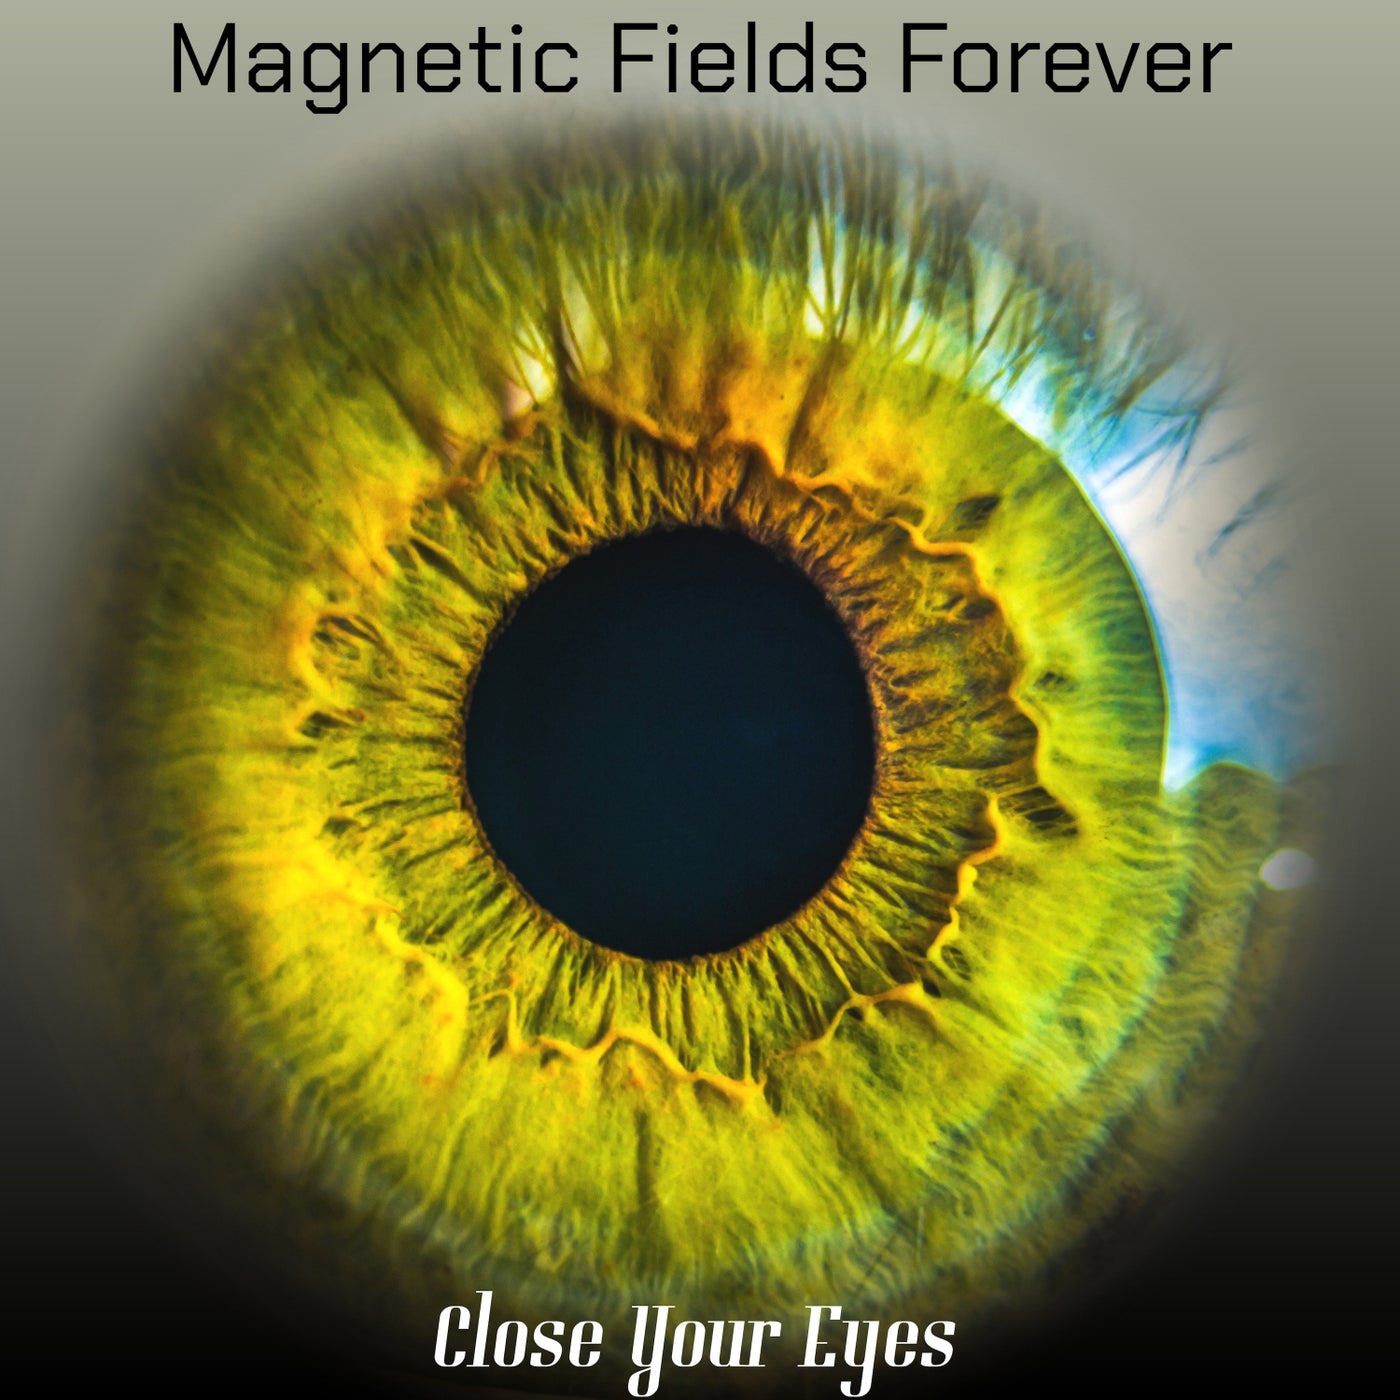 Close forever. Vision альбом. Gold Vision album. Группа de.Vision альбомы. Eye album Cover.